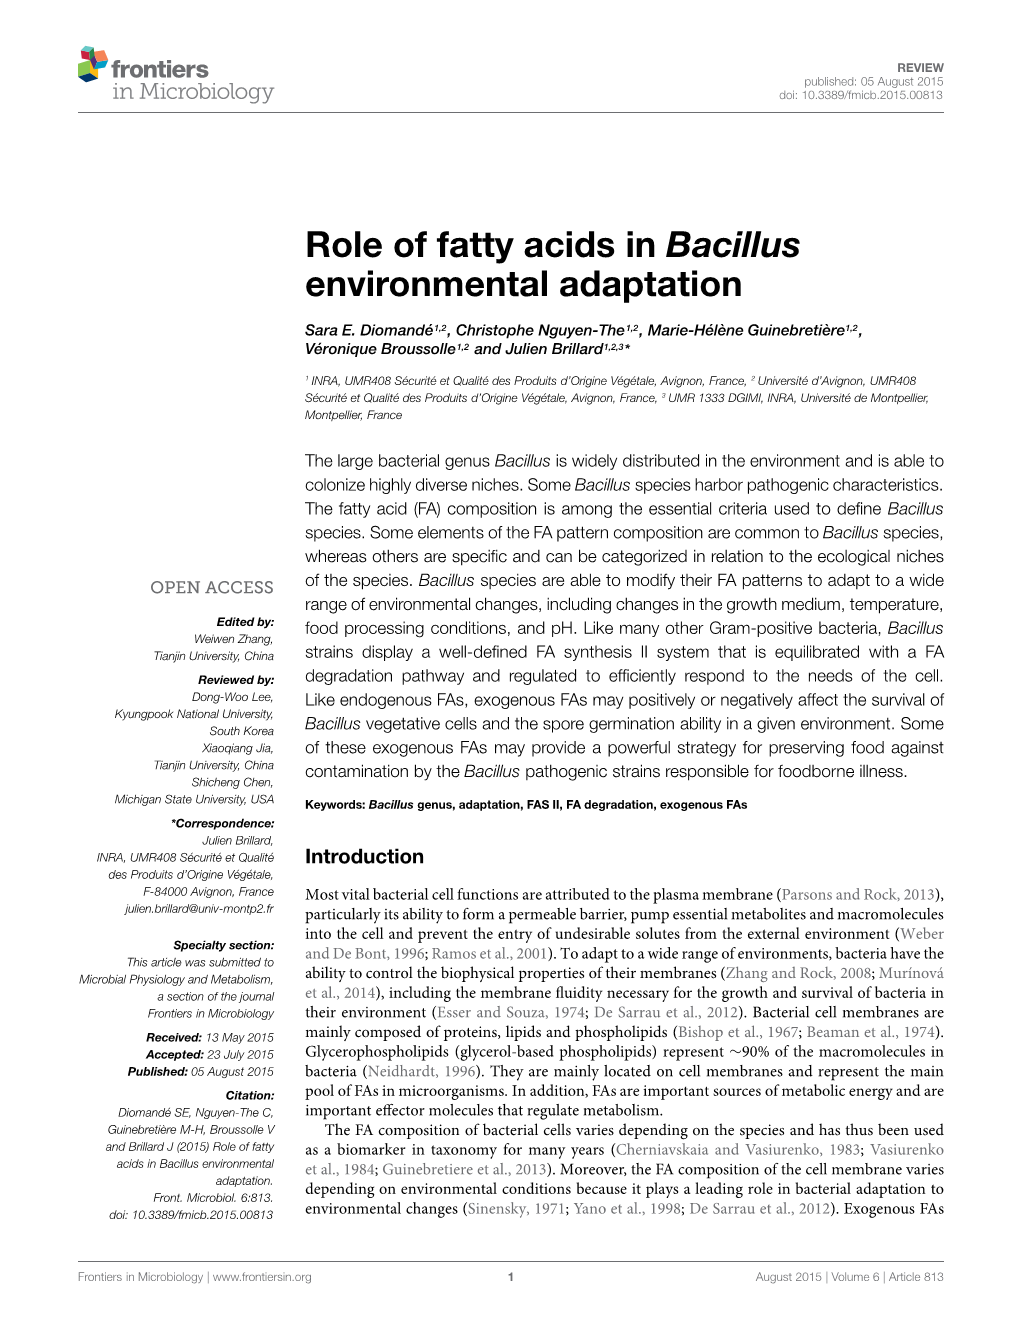 Role of Fatty Acids in Bacillus Environmental Adaptation